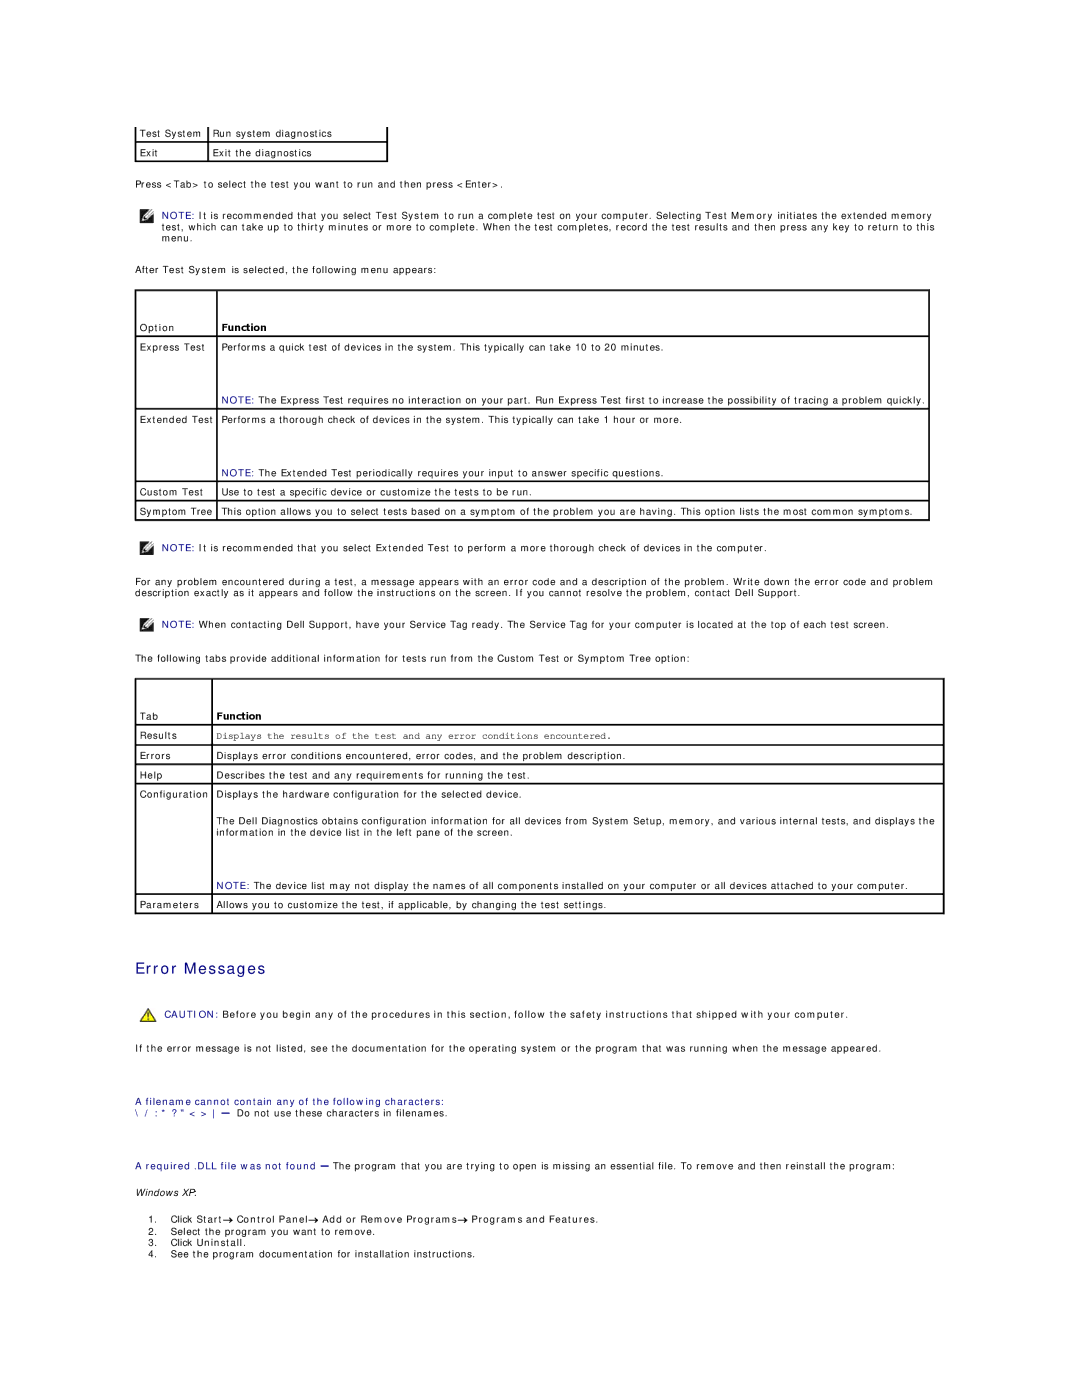 Dell PP30L manual Error Messages, Tab Function, Click Uninstall 